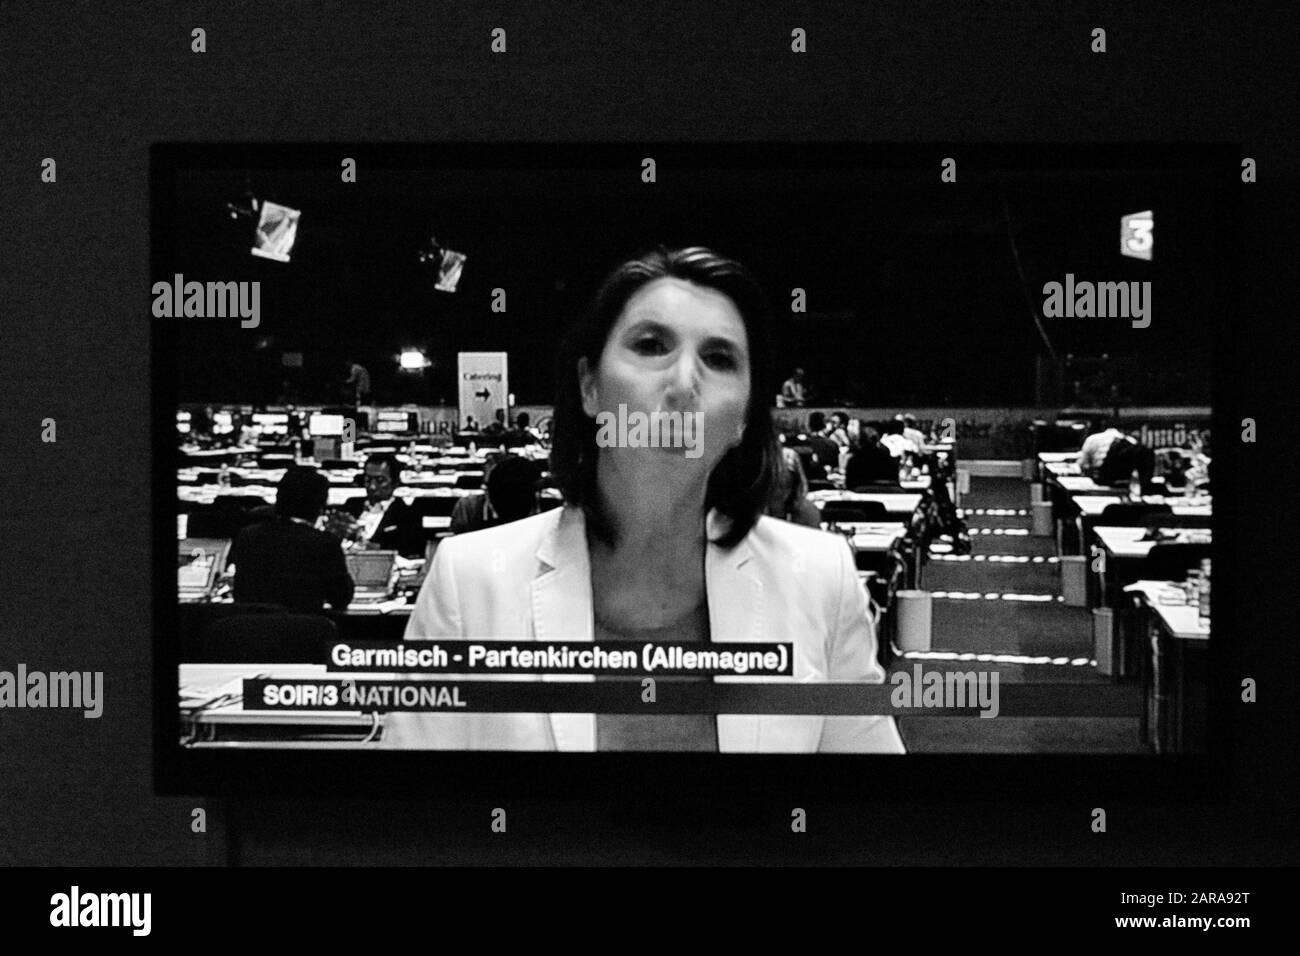 TV newsreader, woman in suit, Paris, France, Europe Stock Photo